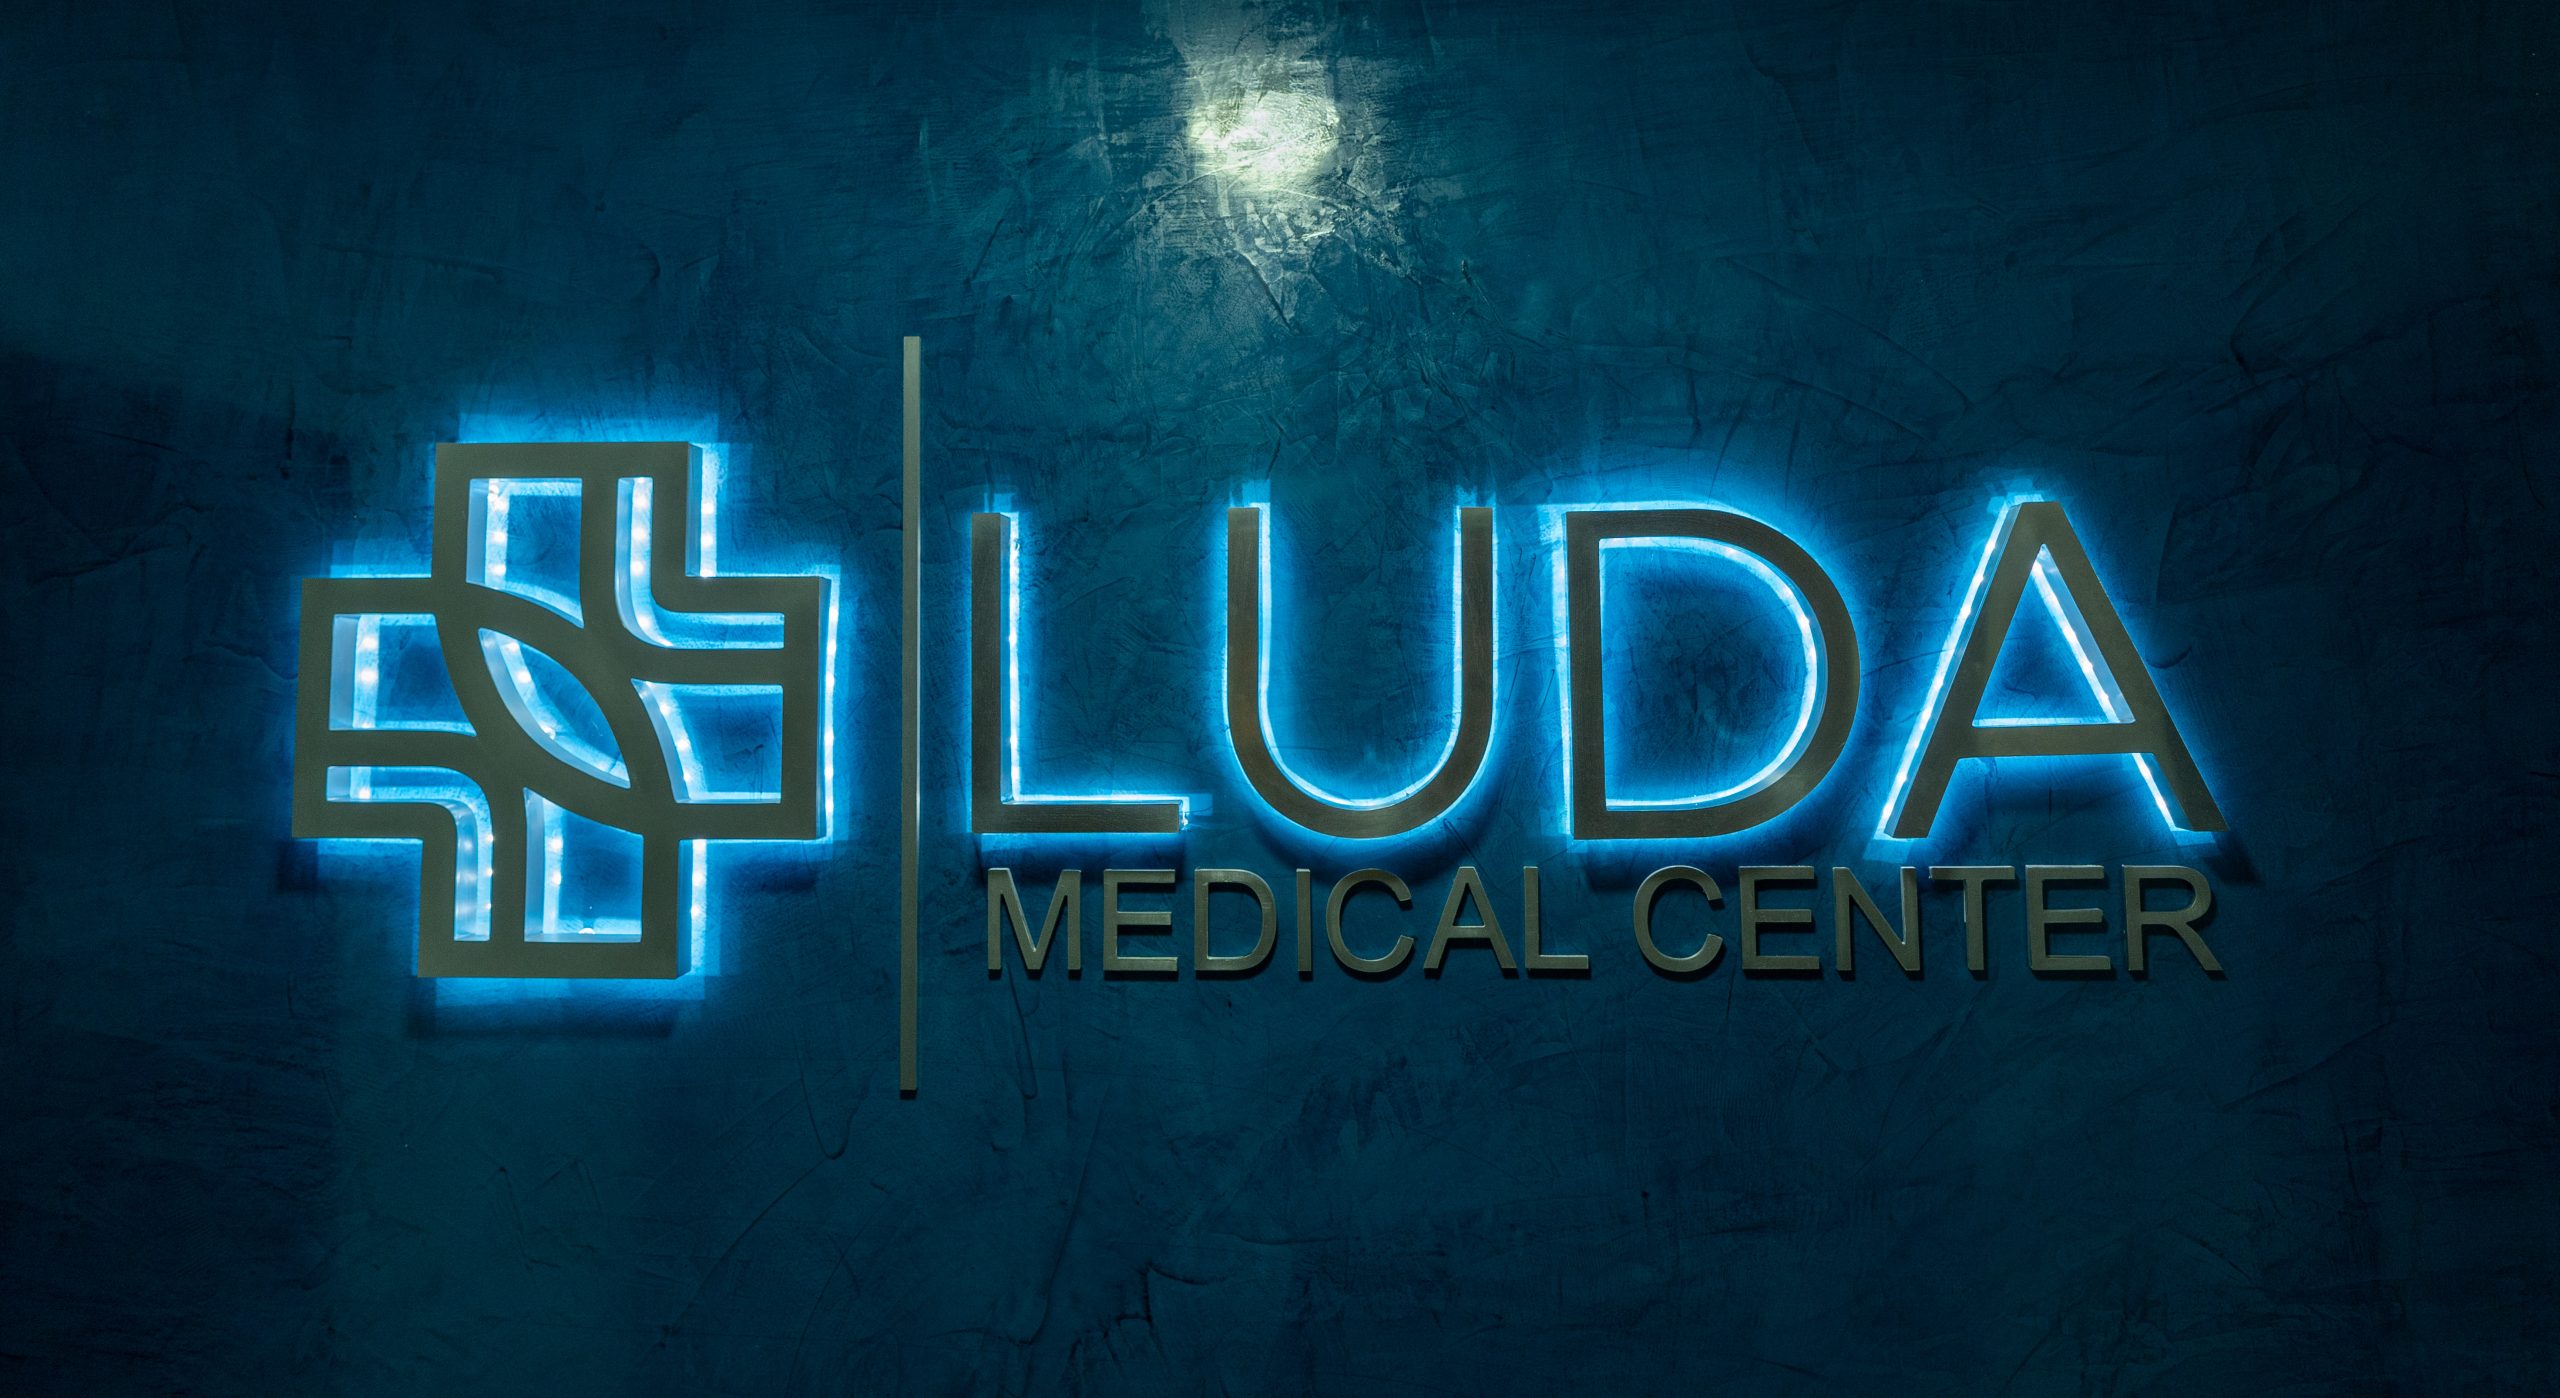 LUDA Medical Center